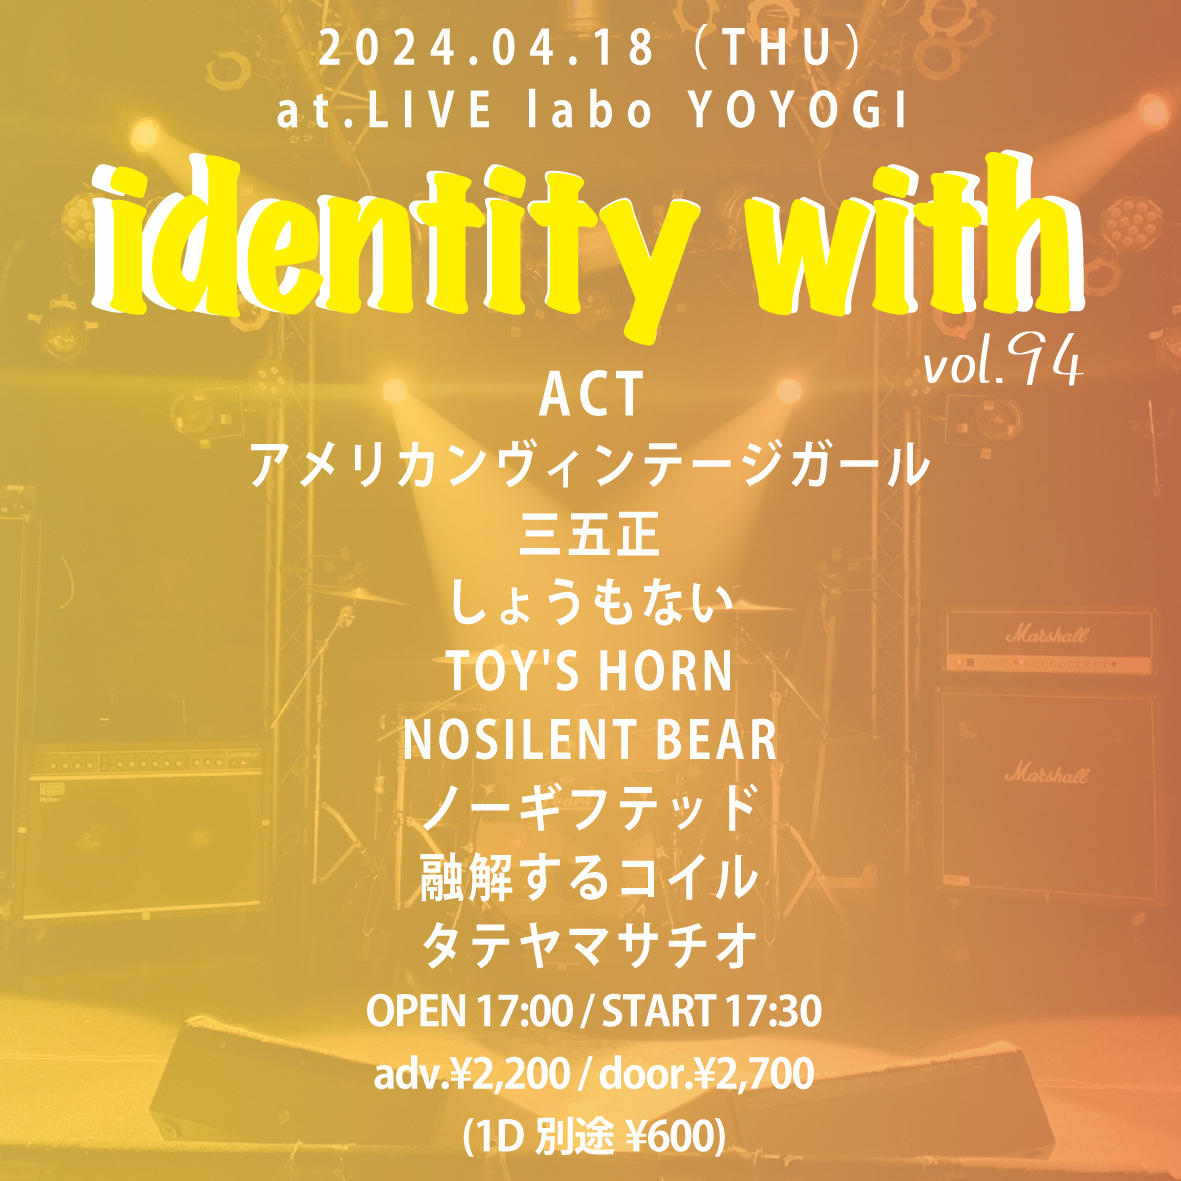 identity with vol.94